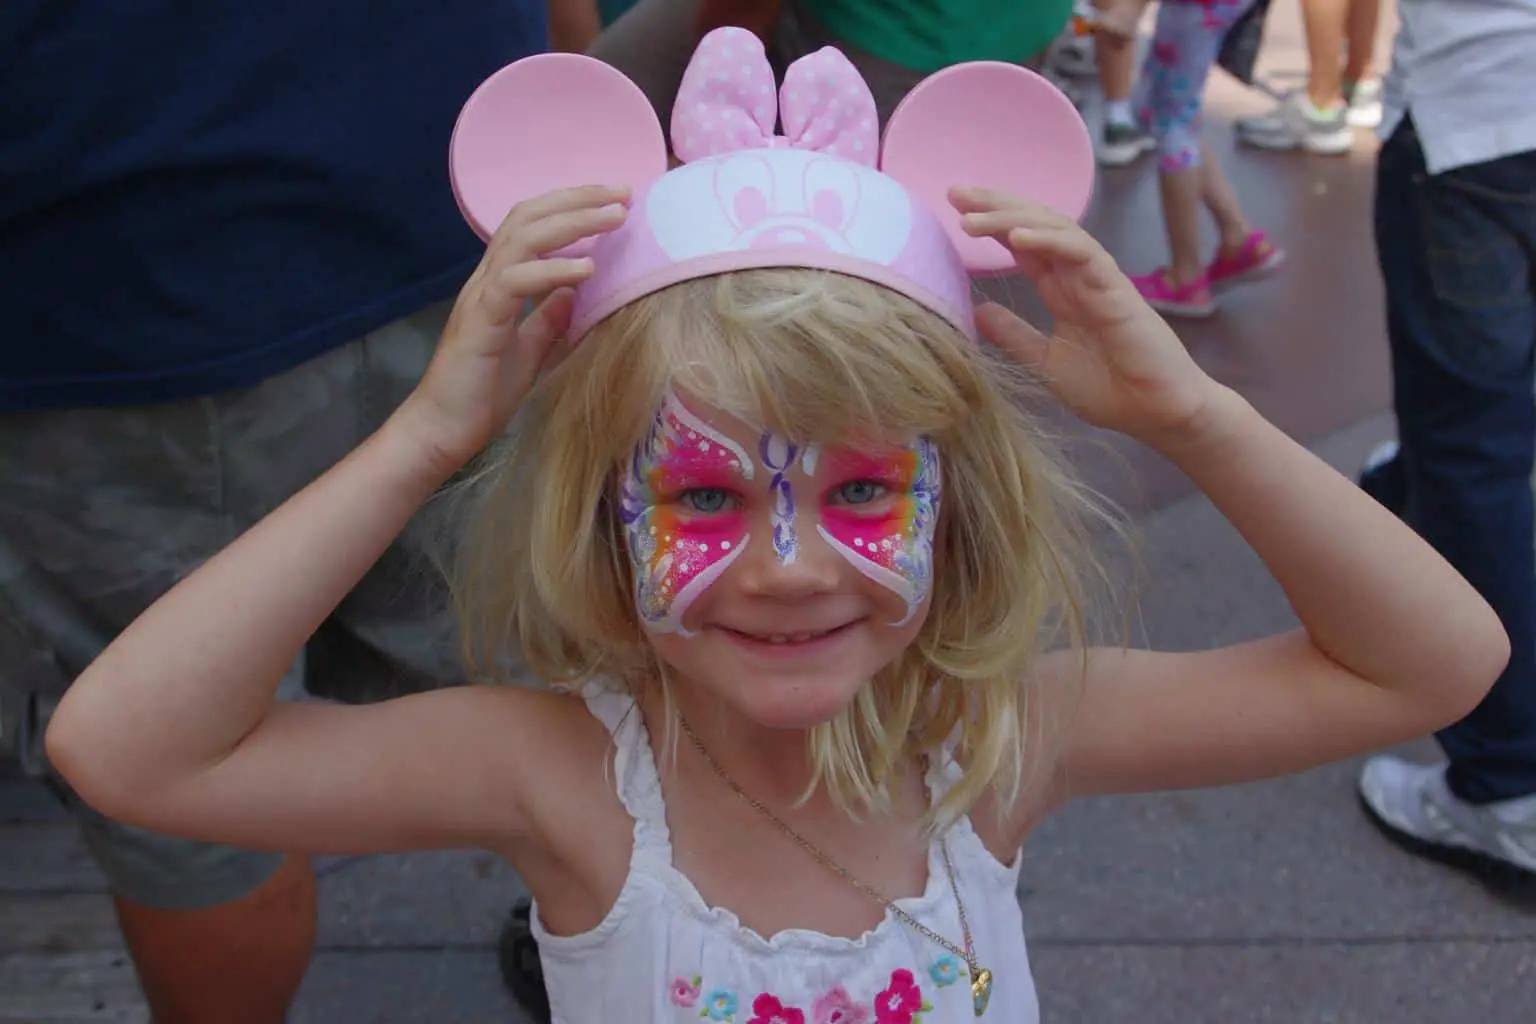 Do You Need An ID To Get Into Disney World? - kid enjoying disney